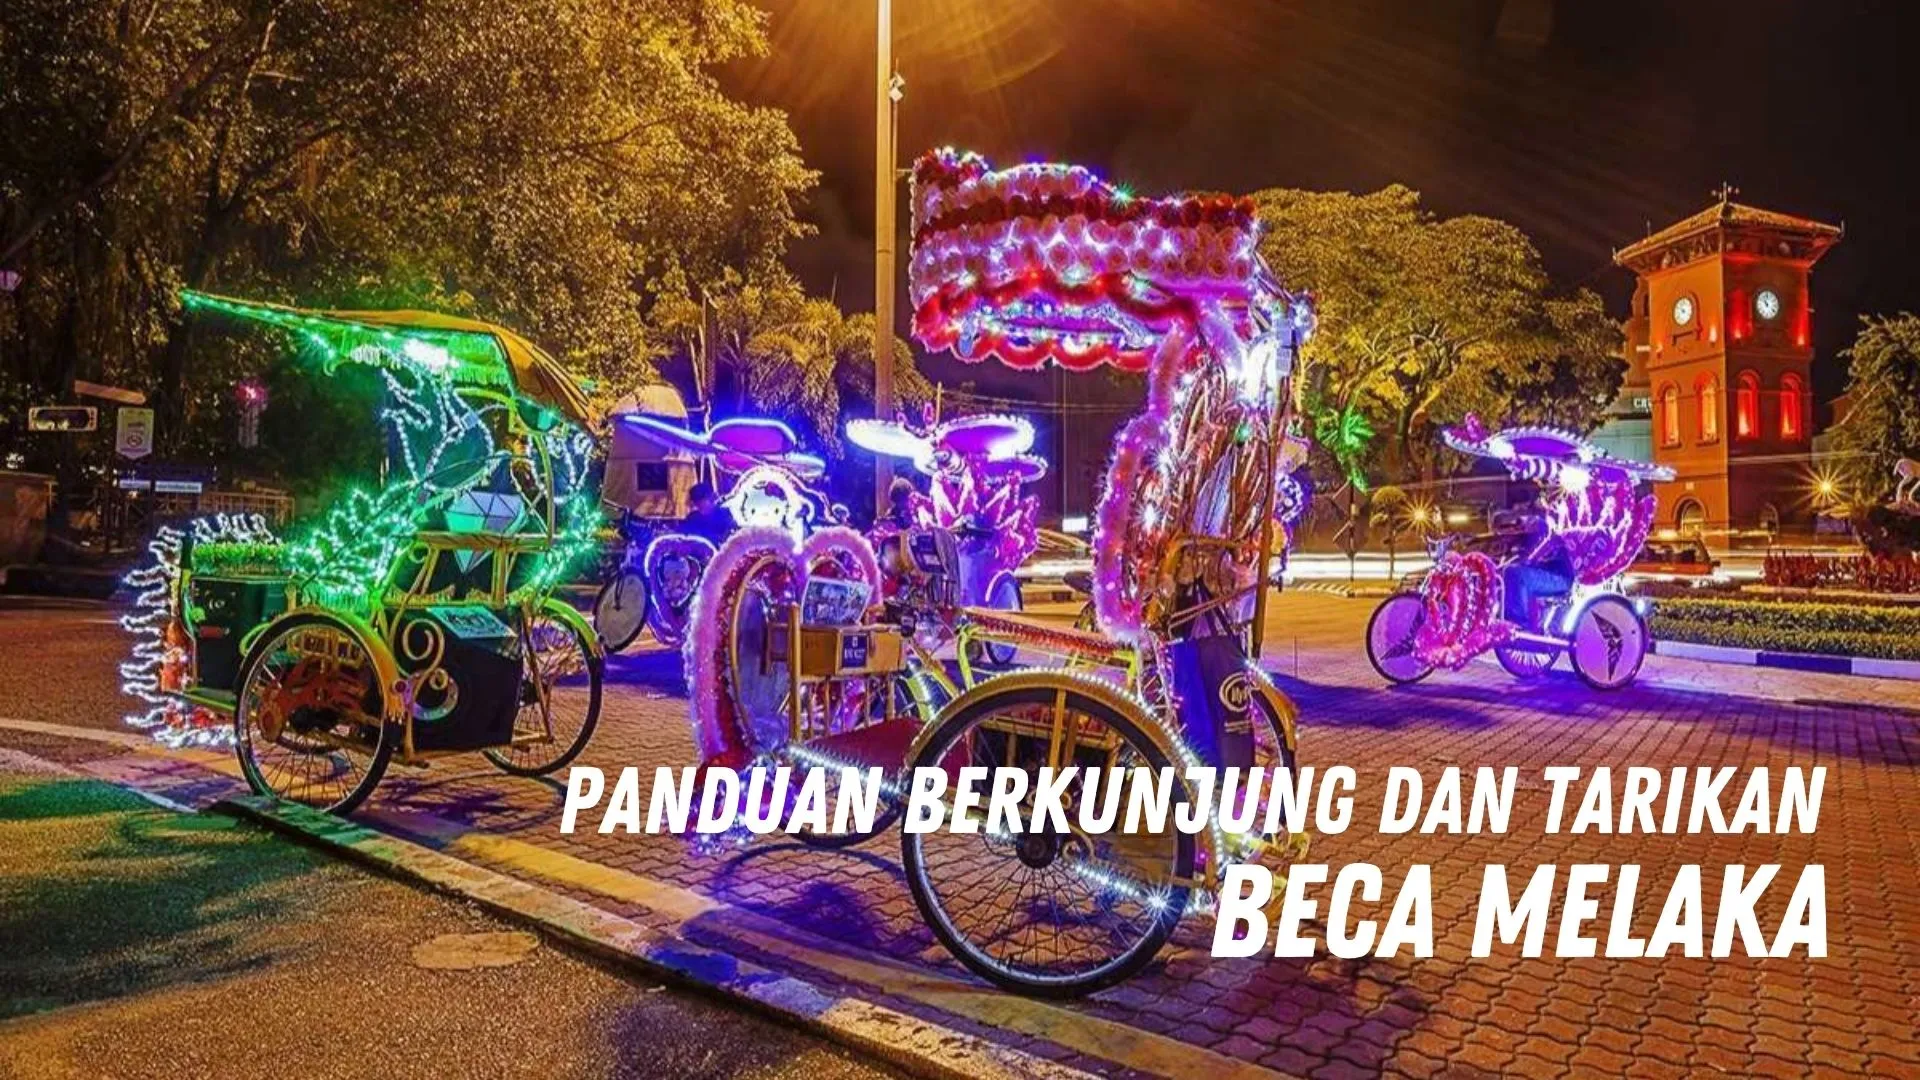 Review Beca Melaka Malaysia